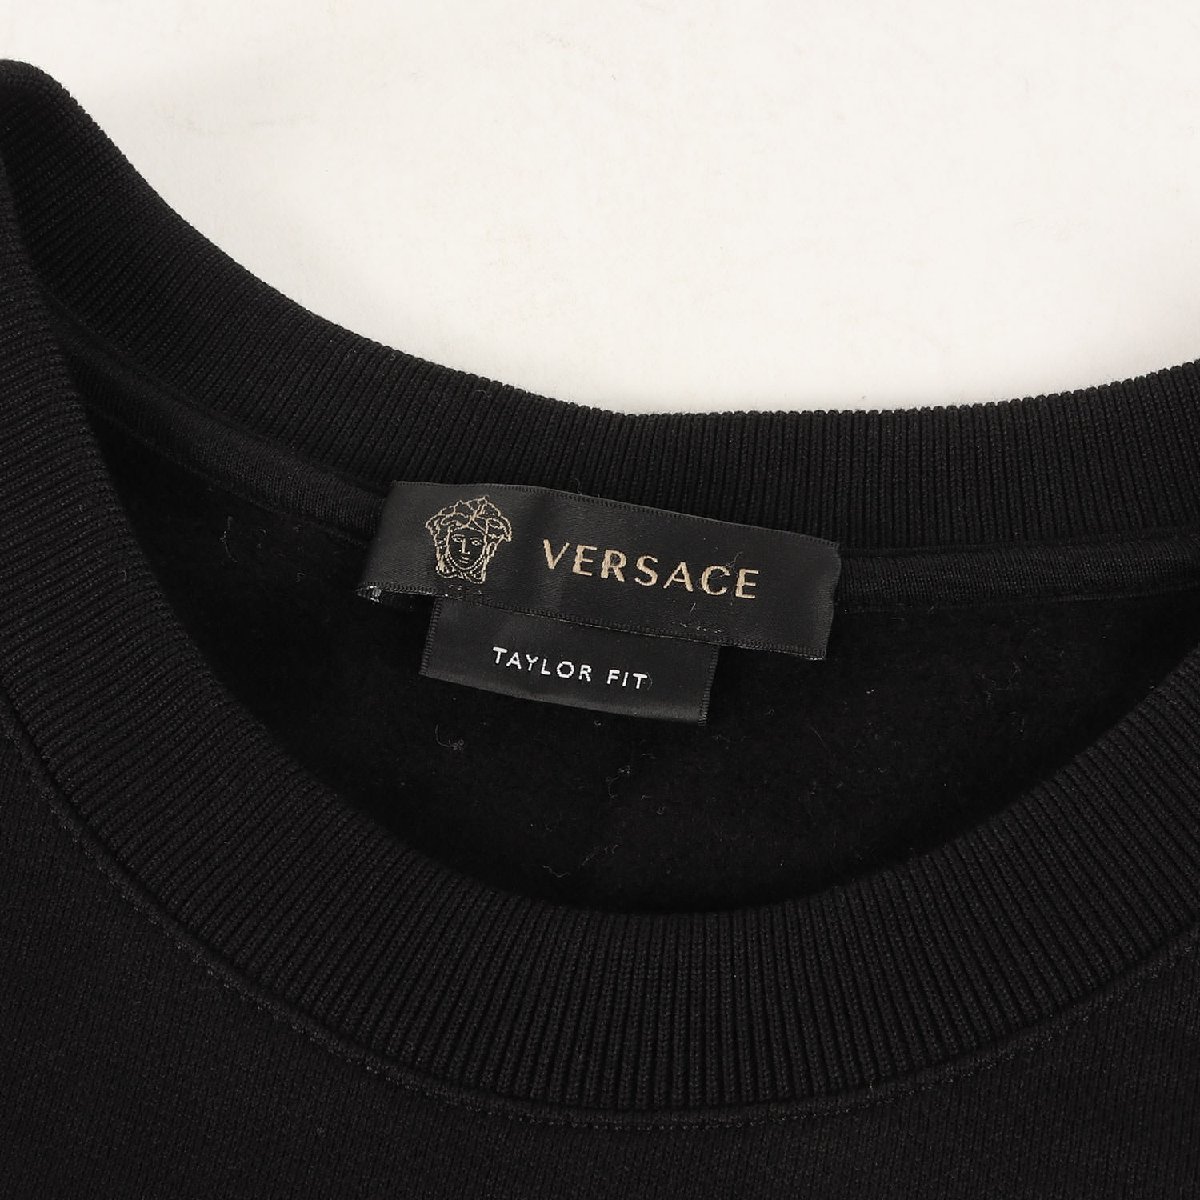 VERSACE Versace sweat size :L 21AW Circle signature Logo embroidery crew neck sweatshirt black Italy made 